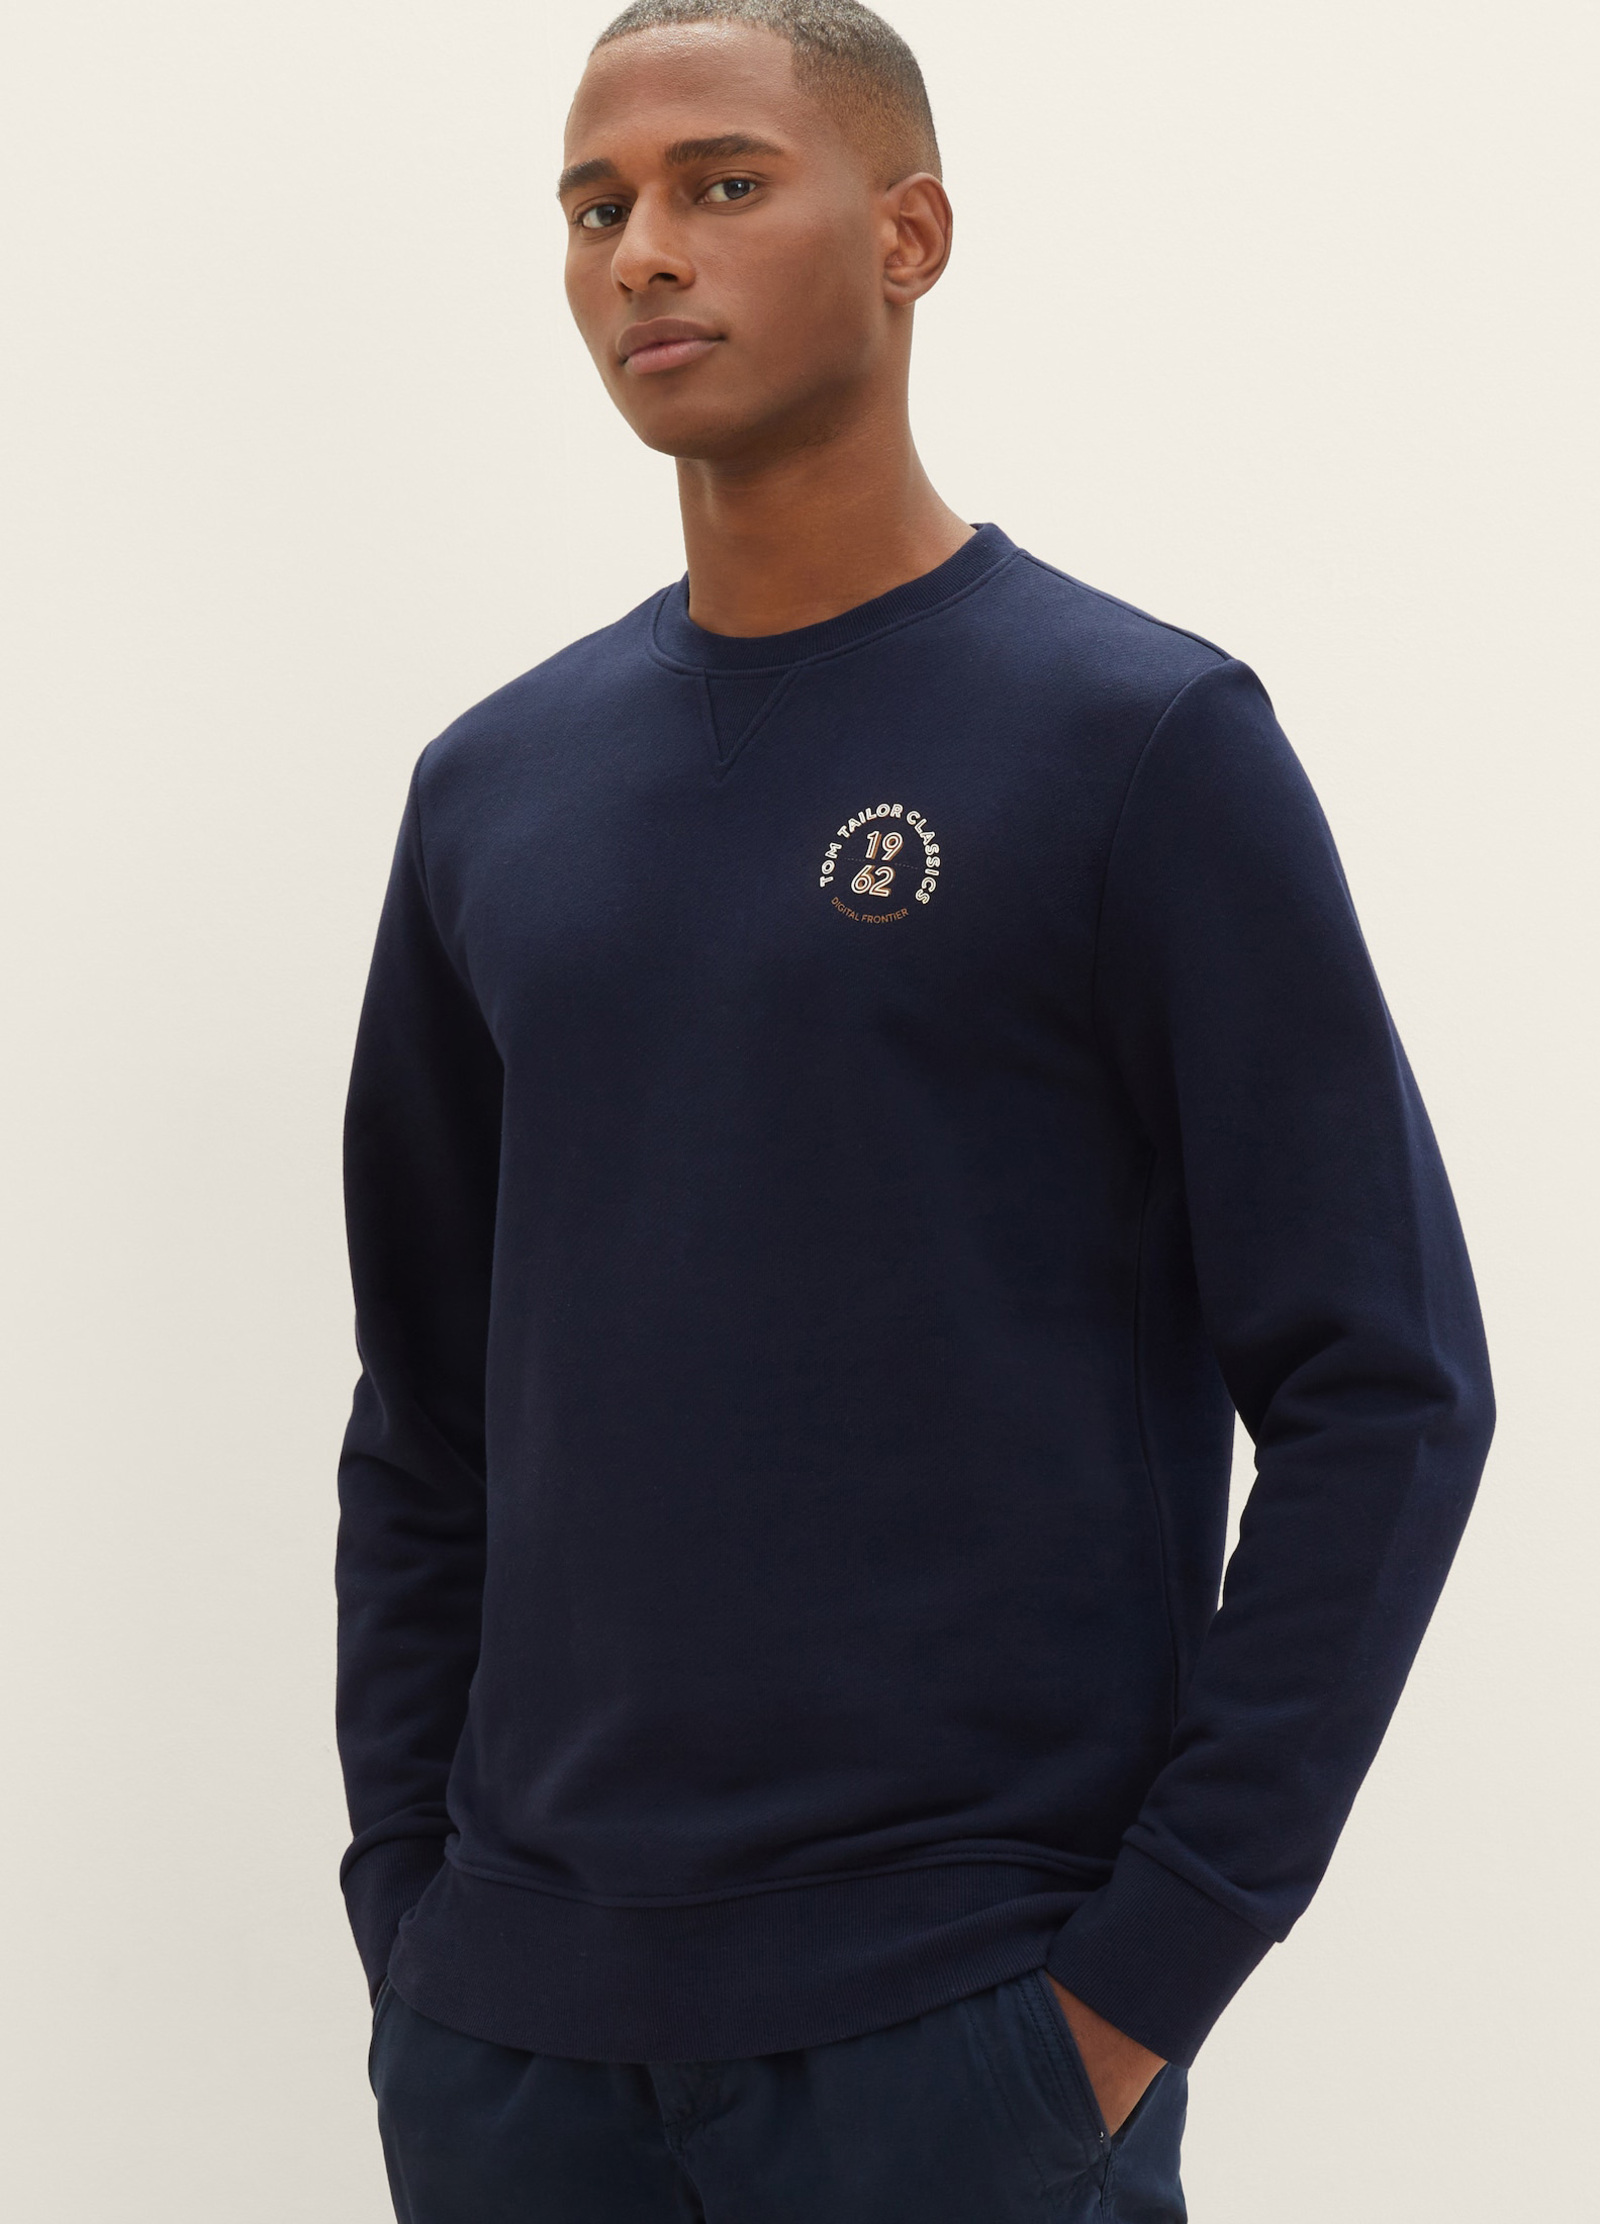 Tailor® L A - Tom Print Blue Captain With Sky Rozmiar Sweatshirt